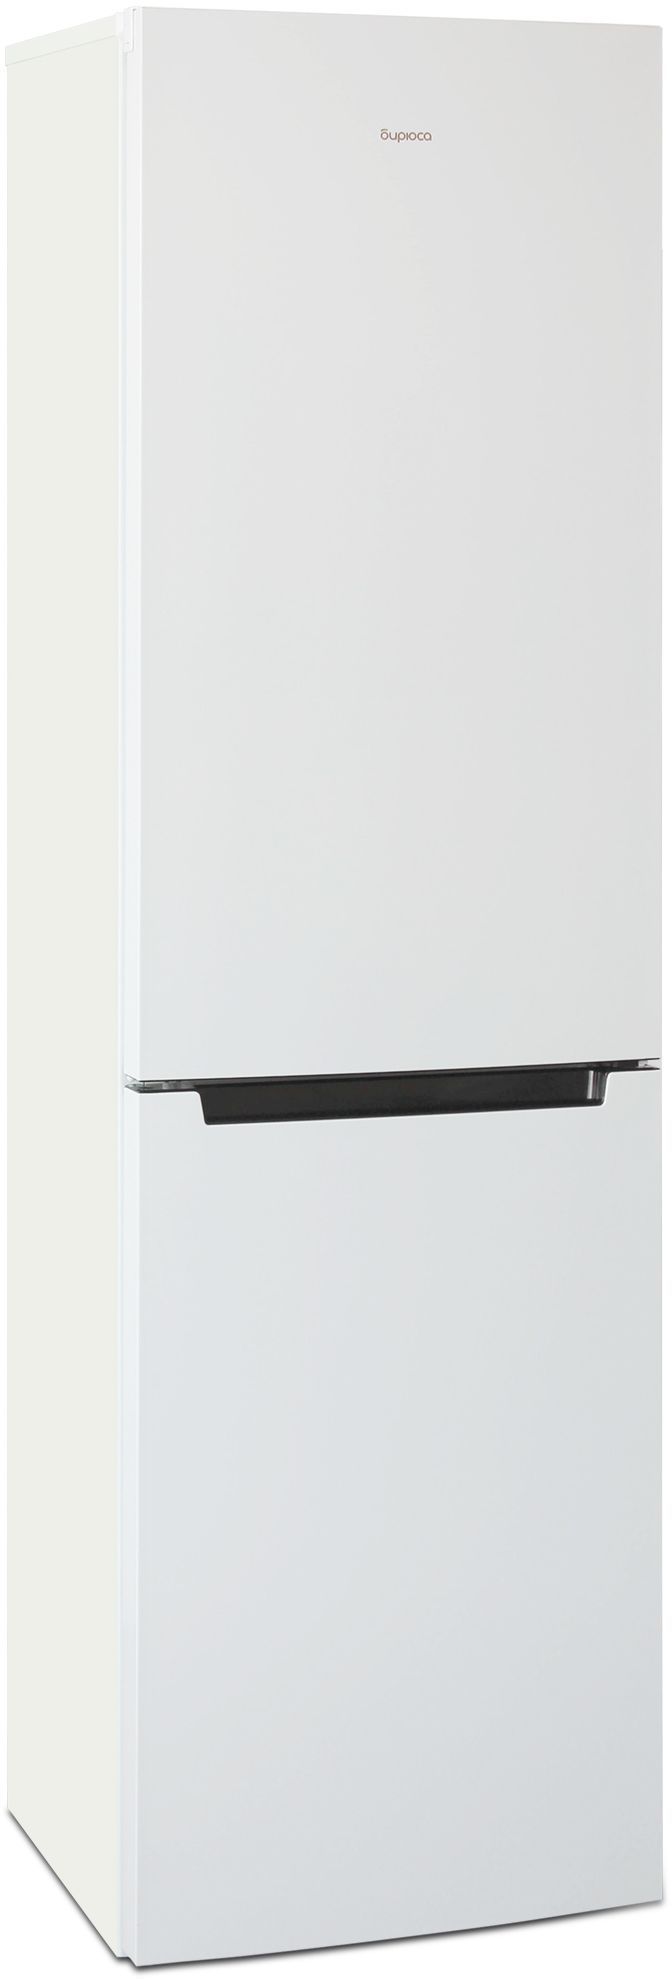 Холодильник бирюса 880nf